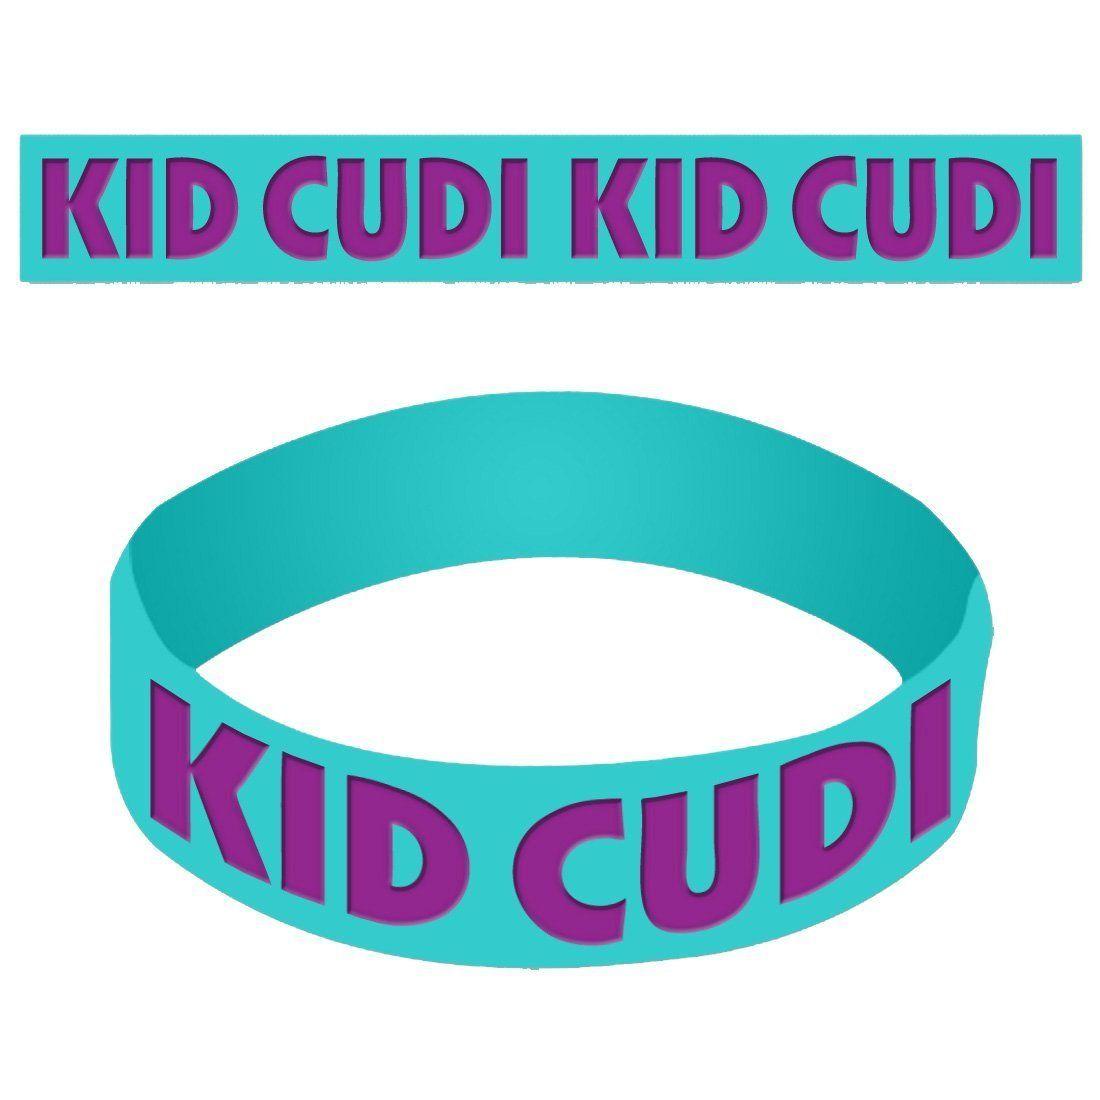 Cudi Logo - Kid Cudi Logo Turquoise Rubber Bracelet Gear Inc